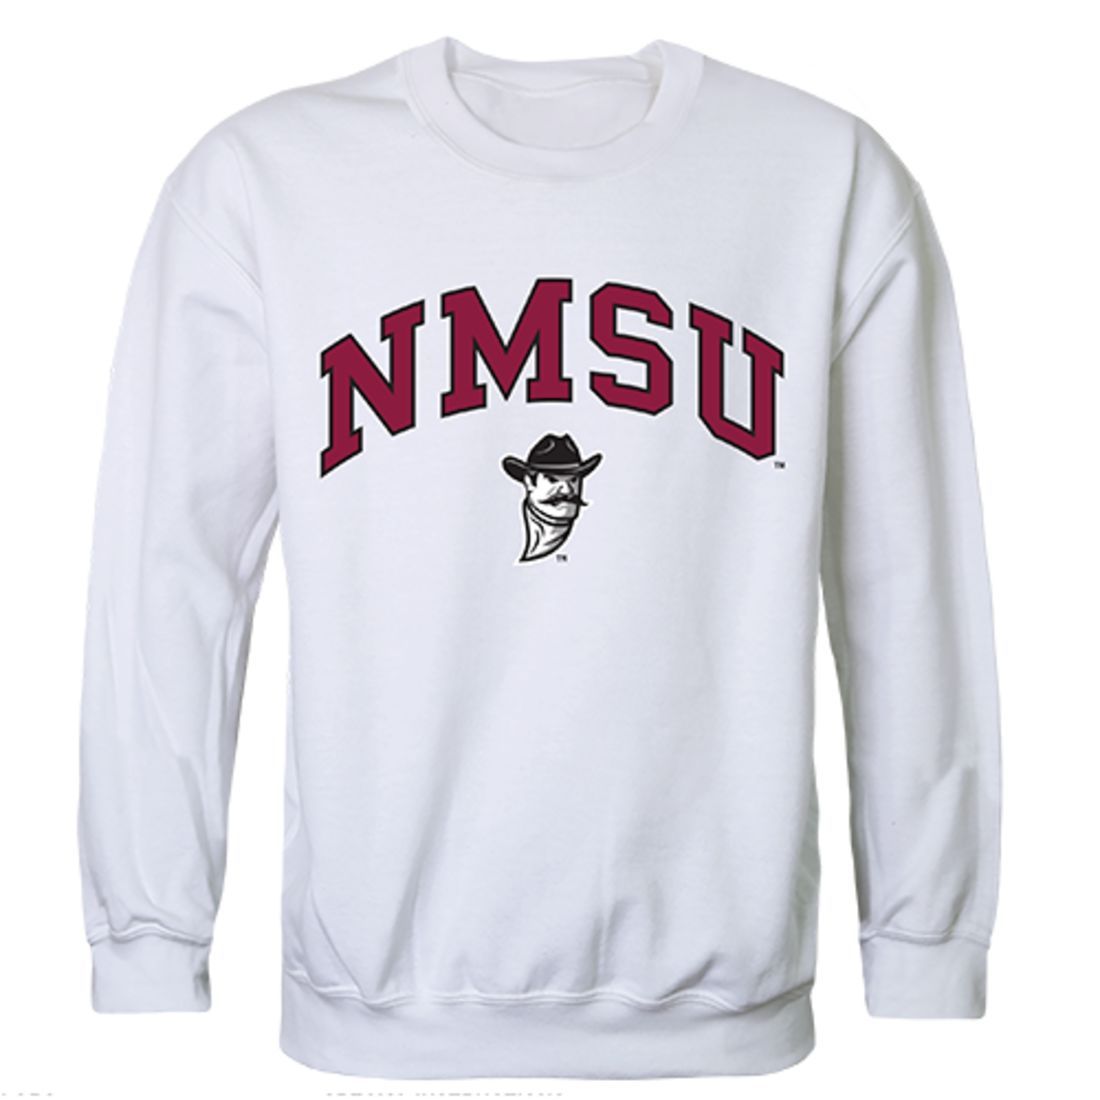 NMSU New Mexico State University Campus Crewneck Pullover Sweatshirt Sweater White-Campus-Wardrobe